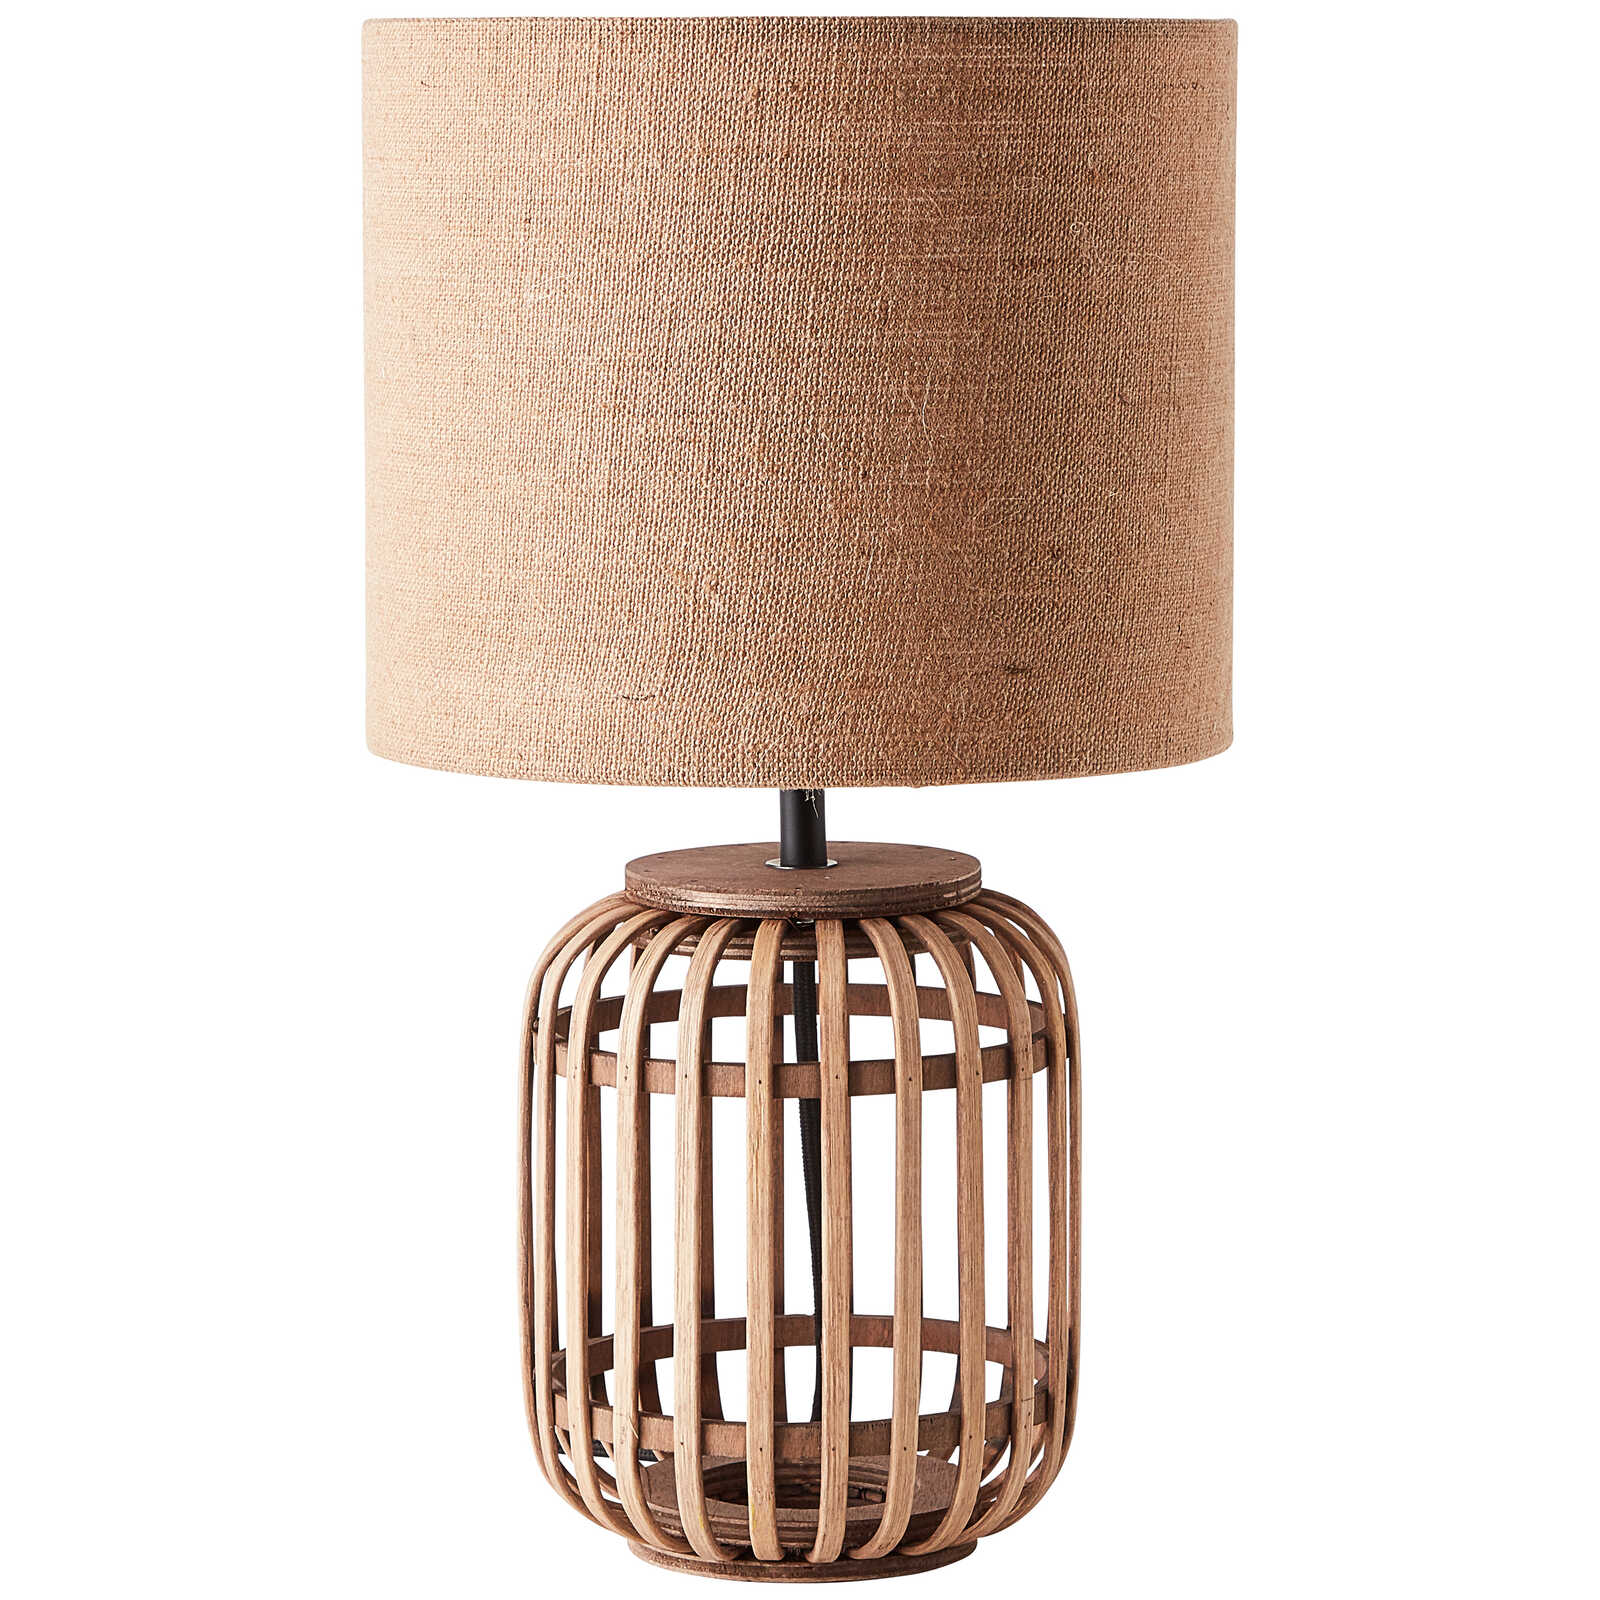             Lampe de table en bambou - Willi 1 - Marron
        